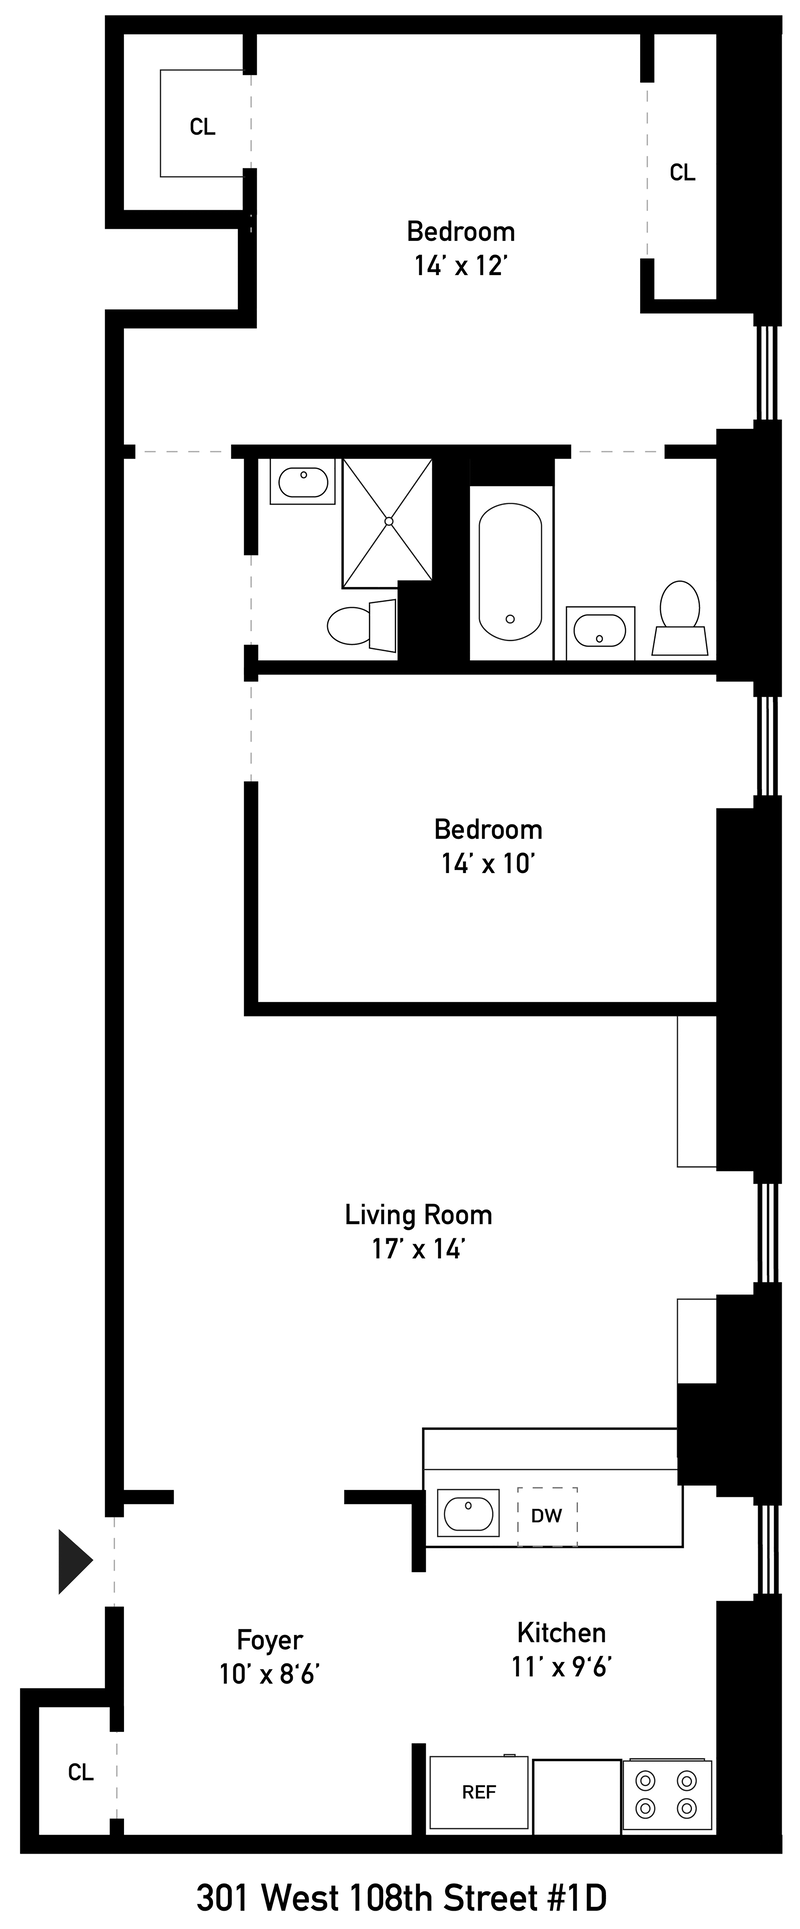 Floorplan for 301 West 108th Street, 1D